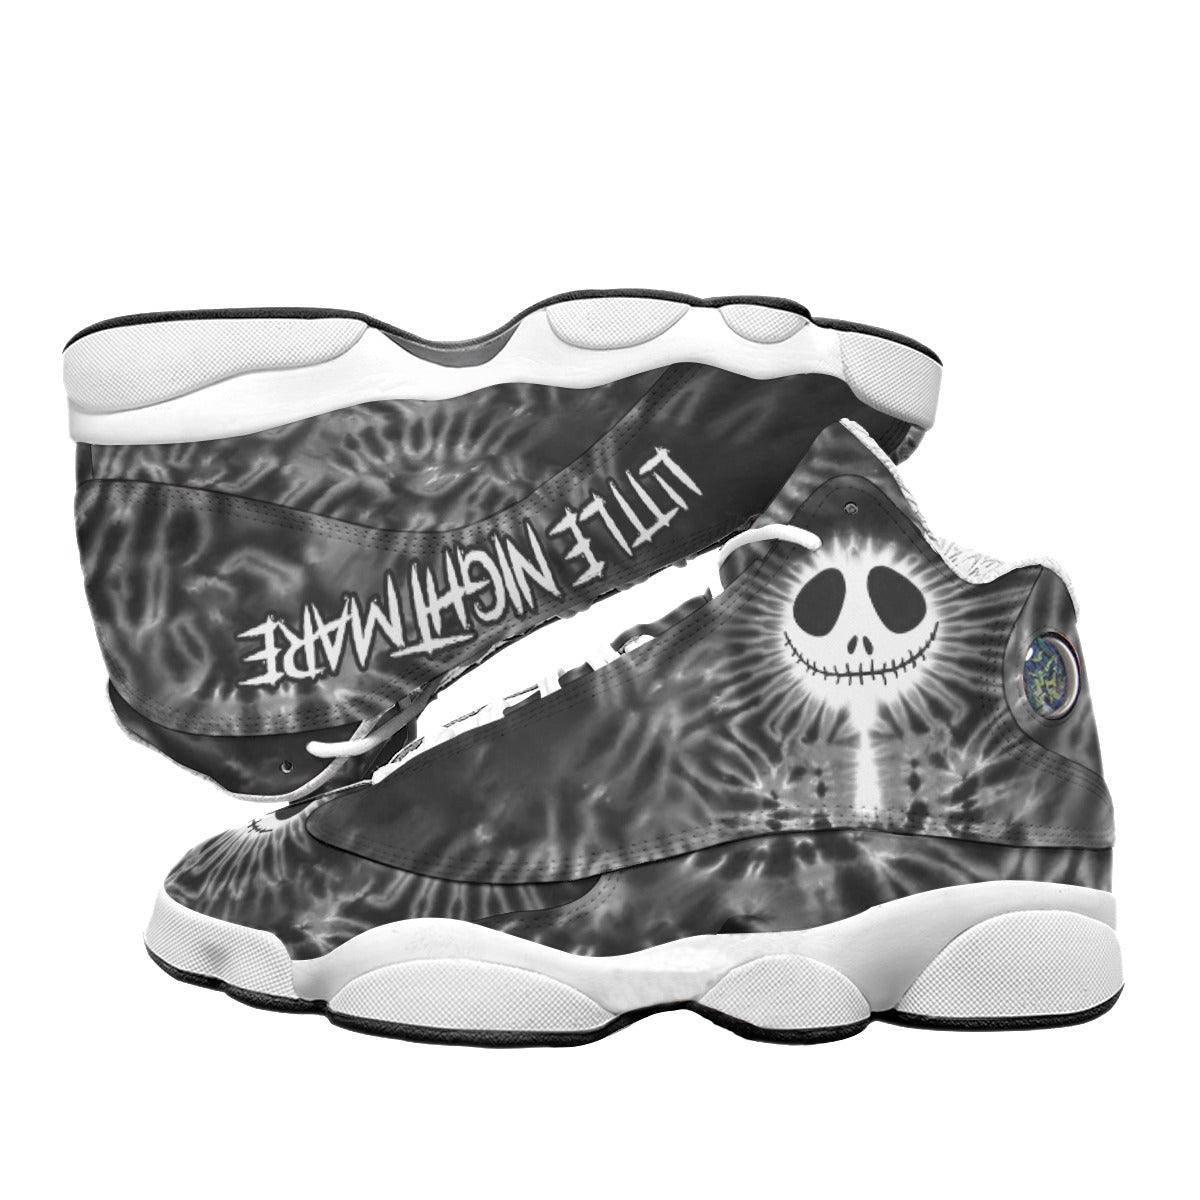 Nightmare Tiedye Gray Men's Curved Basketball Shoes - Wonder Skull